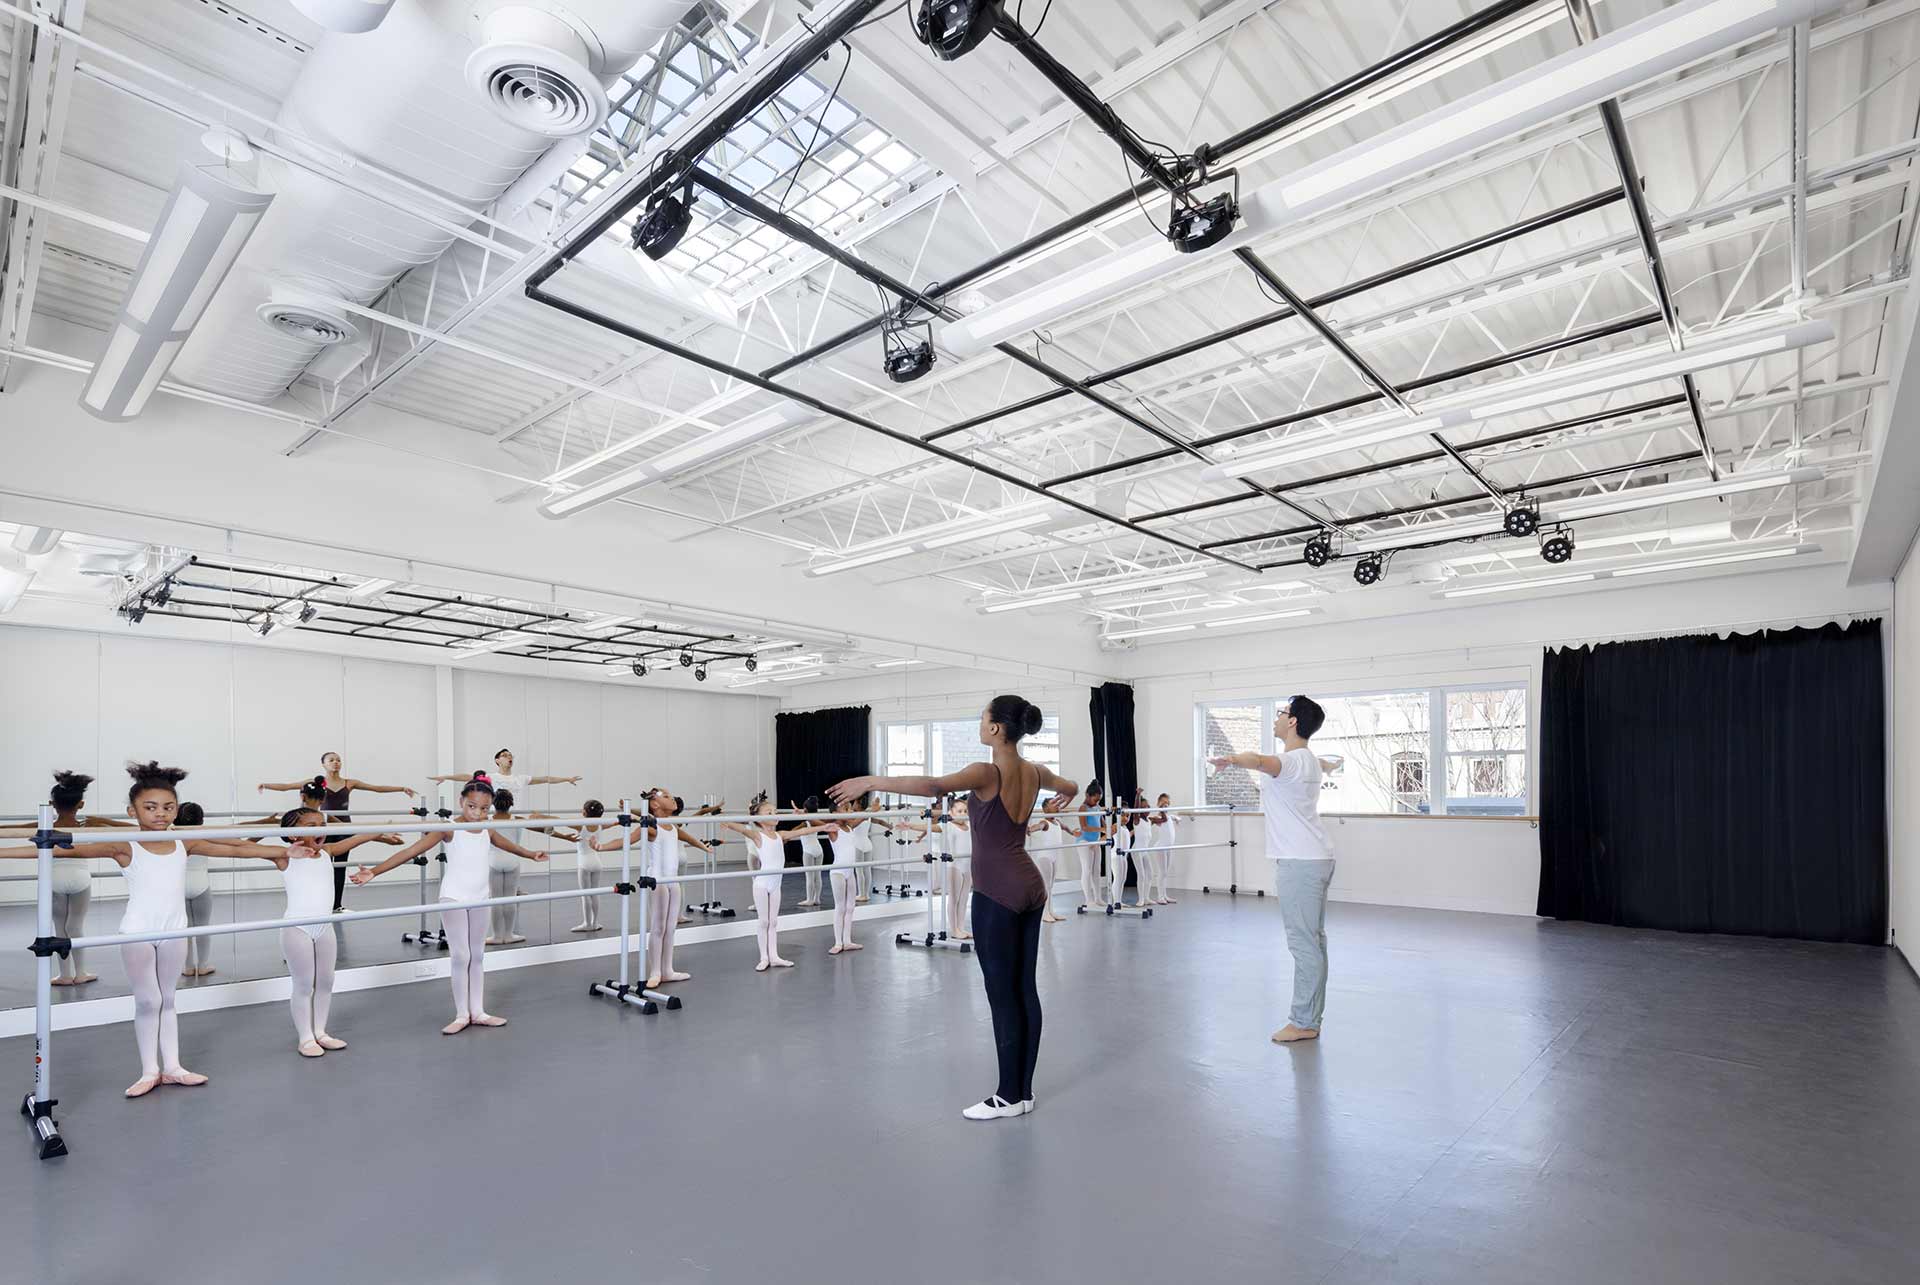 Dance classroom space